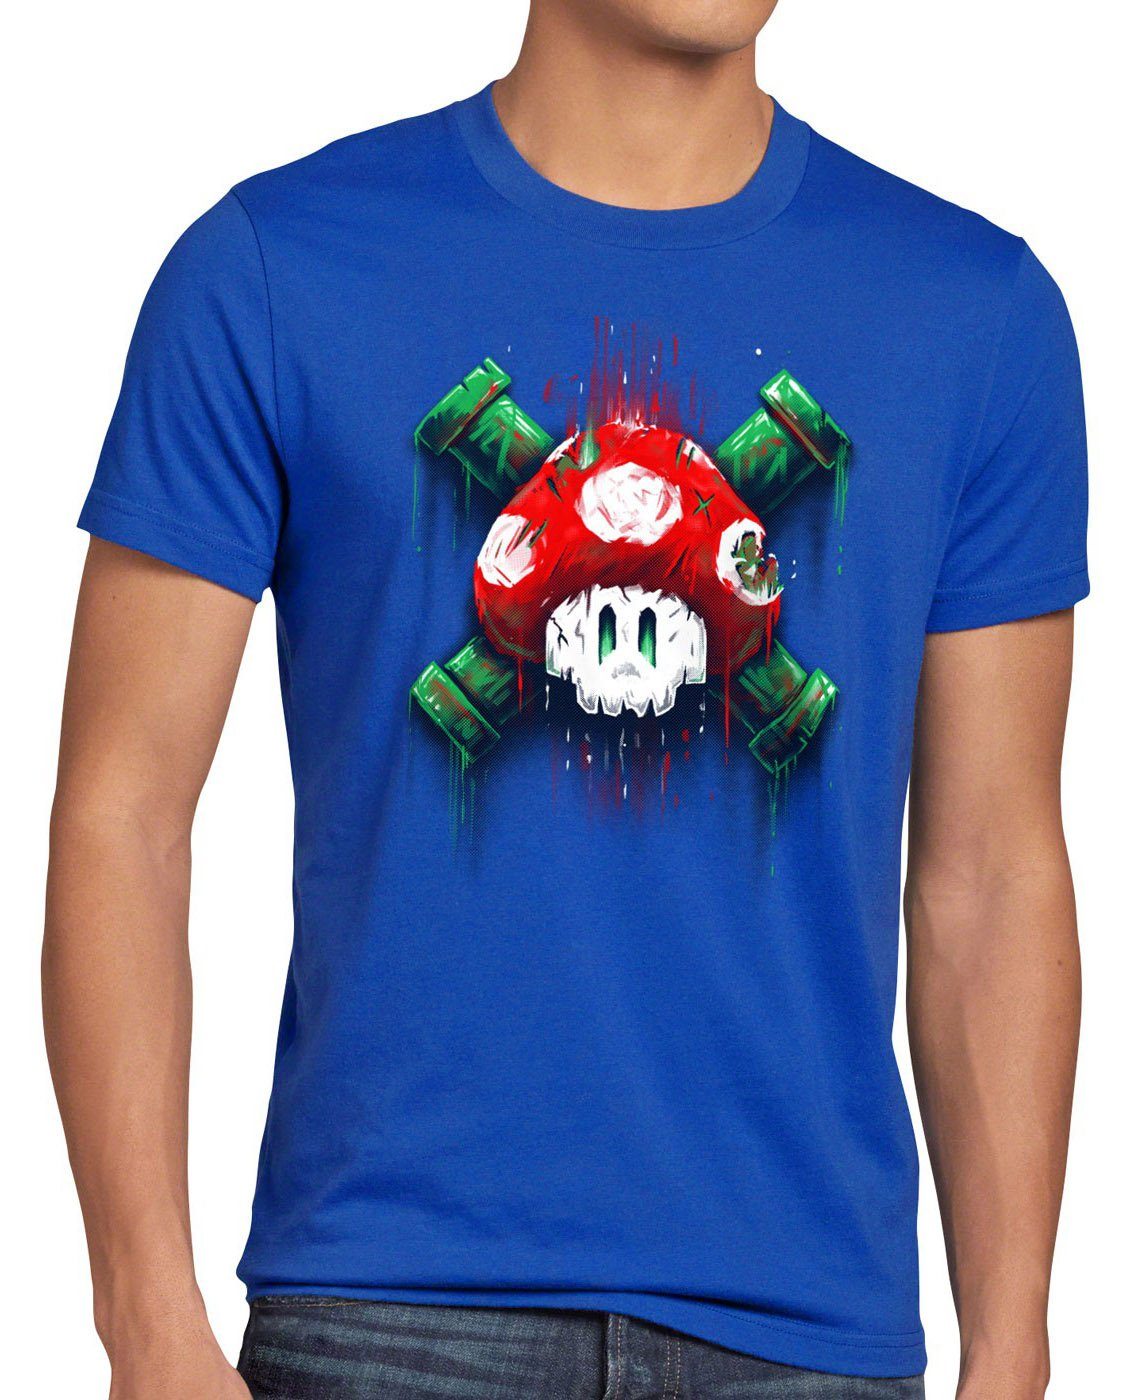 style3 Print-Shirt Herren T-Shirt n64 snes Totenkopf Mario super blau videospiel world nintendo switch